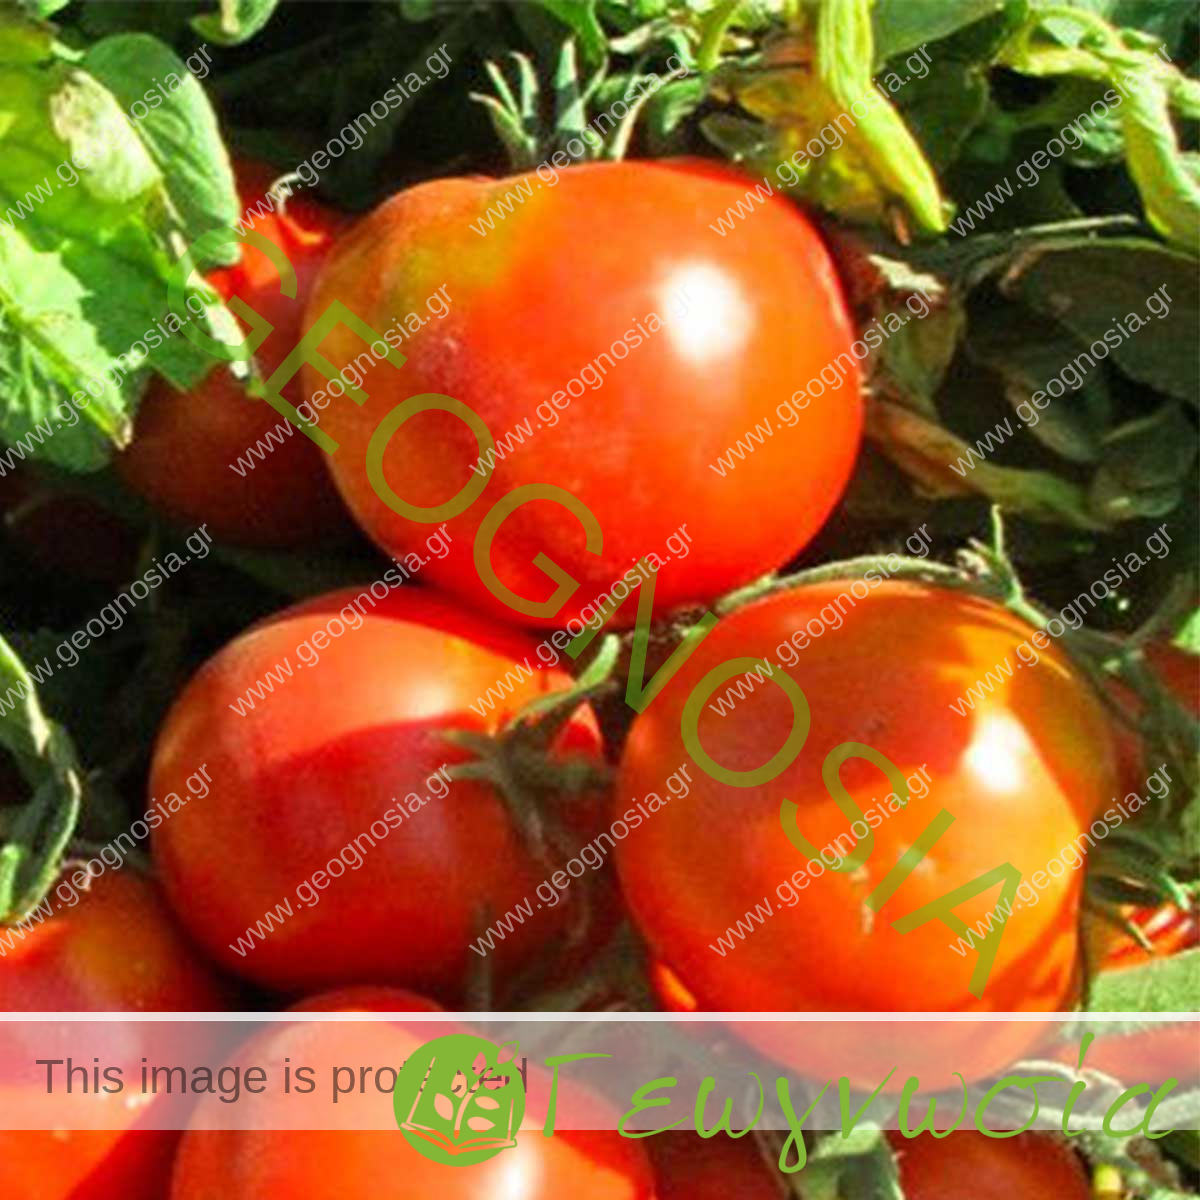 sporoi-tomatas-aytokladeyomenis-sannio-f1-unigen-seeds